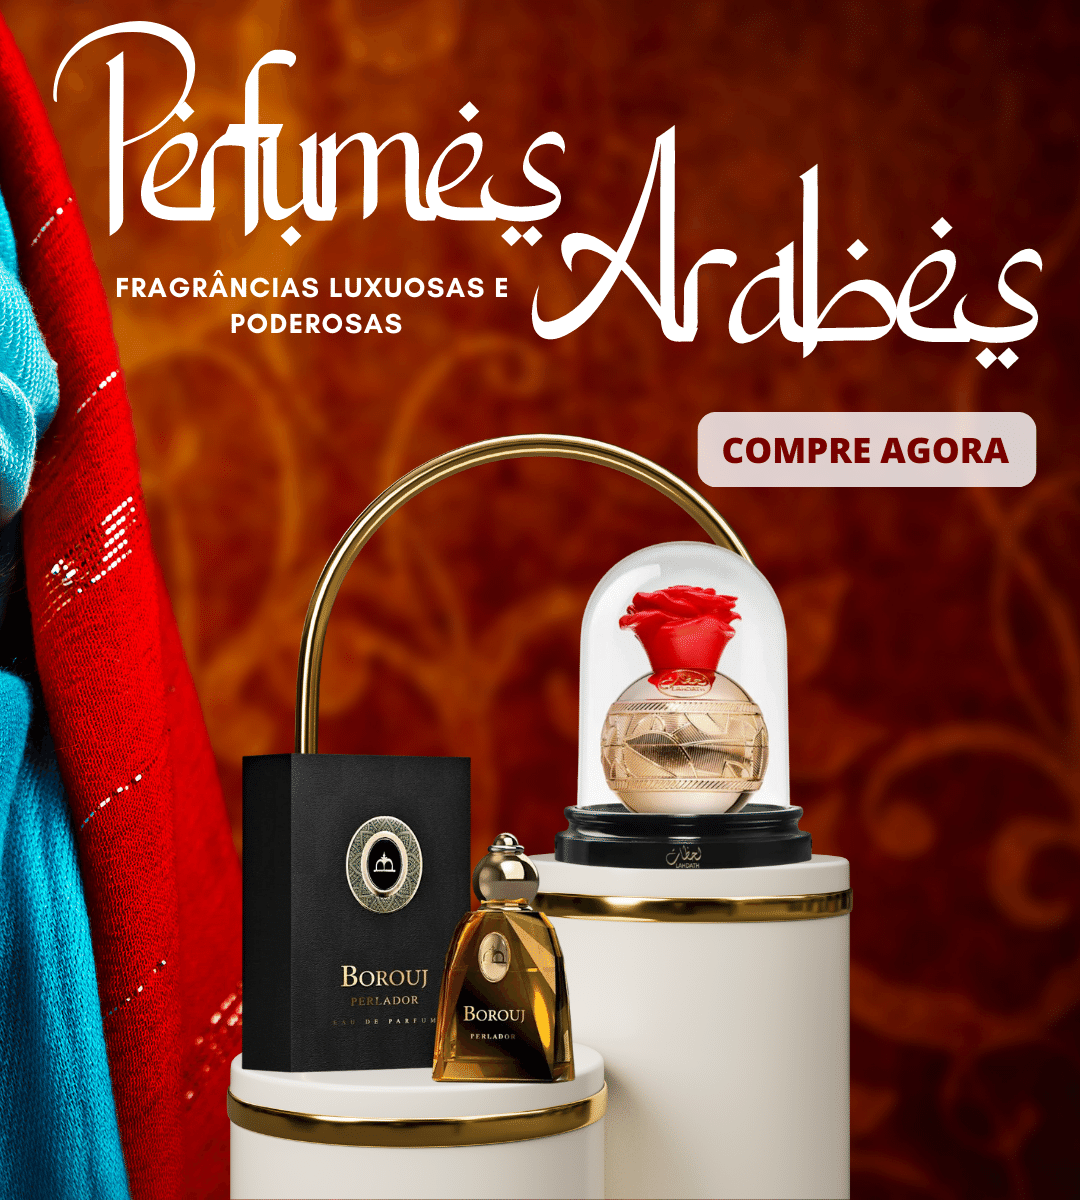 Perfumes Arabes - Mobile